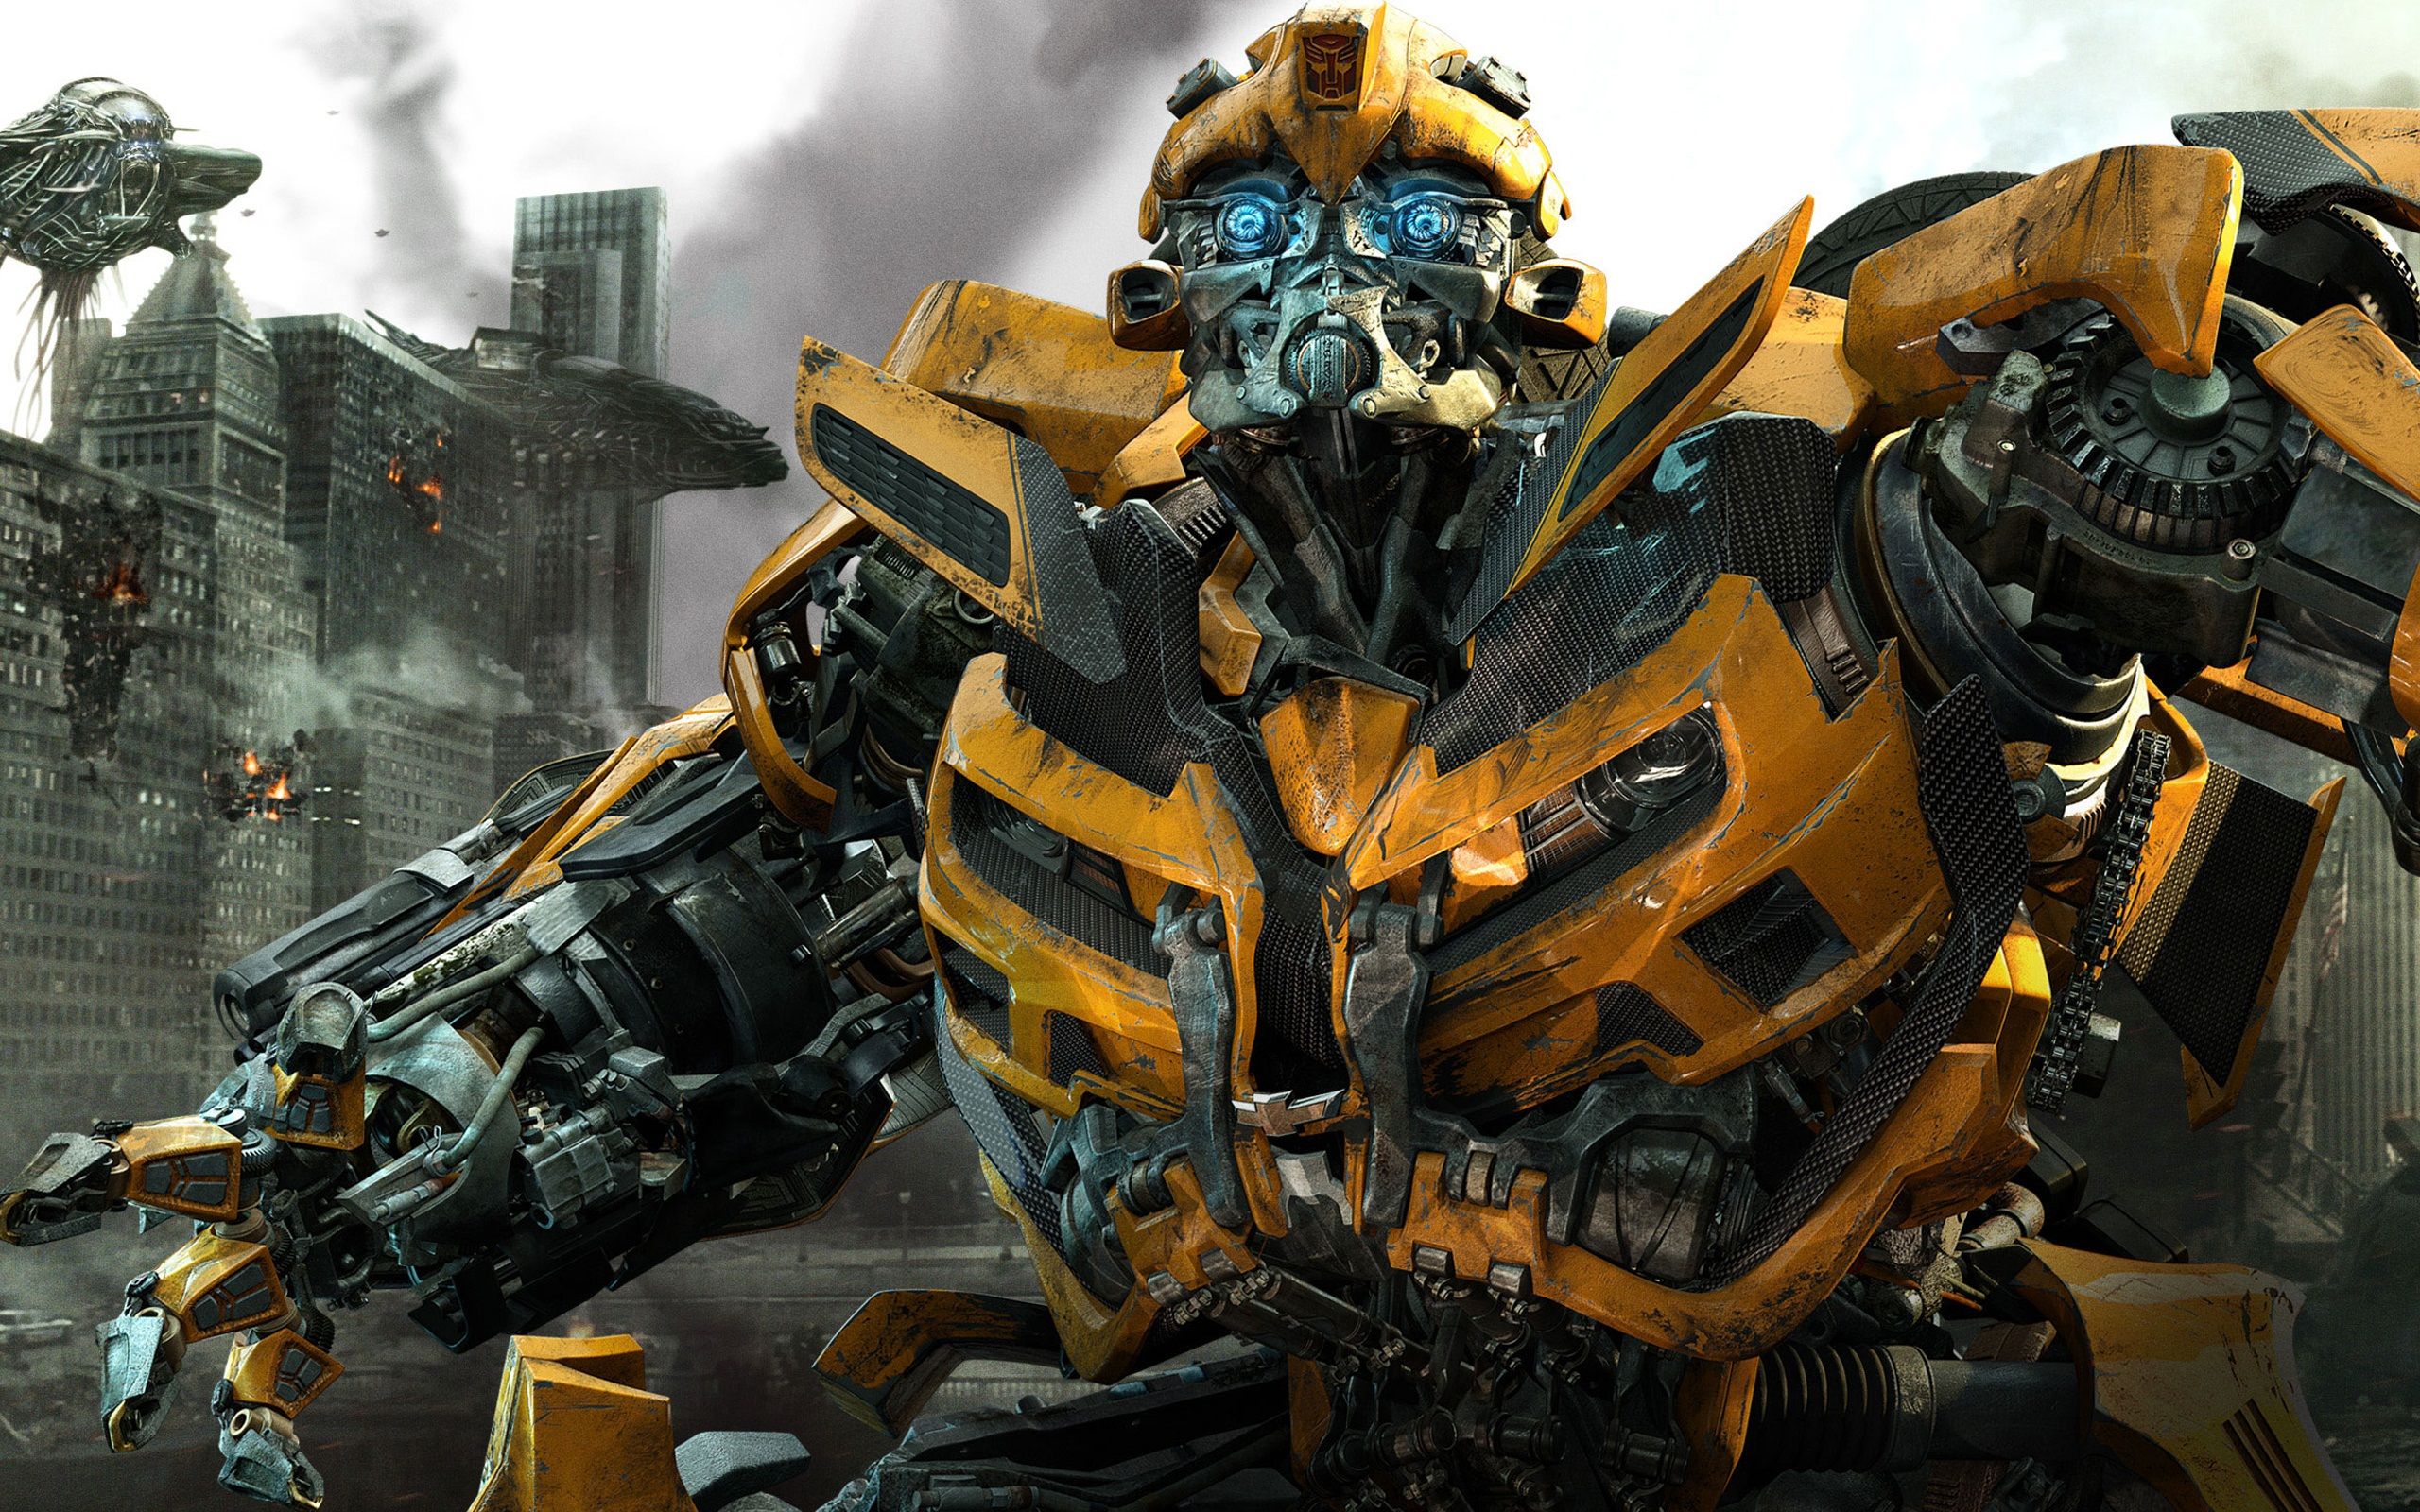 Hasbro CEO Brian Goldner Talks Hasbro Transformers Future, Cinematic Universe, Mentions Bumblebee